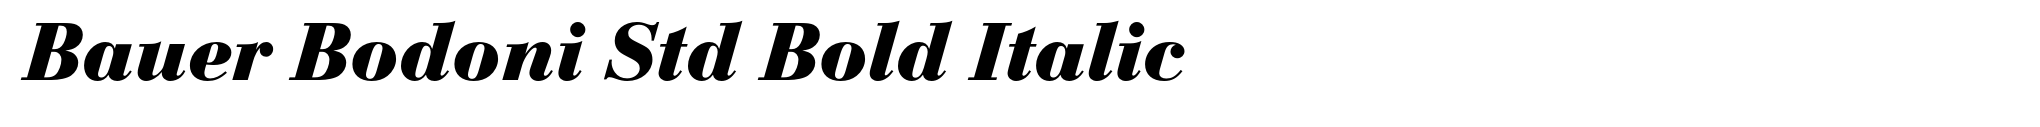 Bauer Bodoni Std Bold Italic image